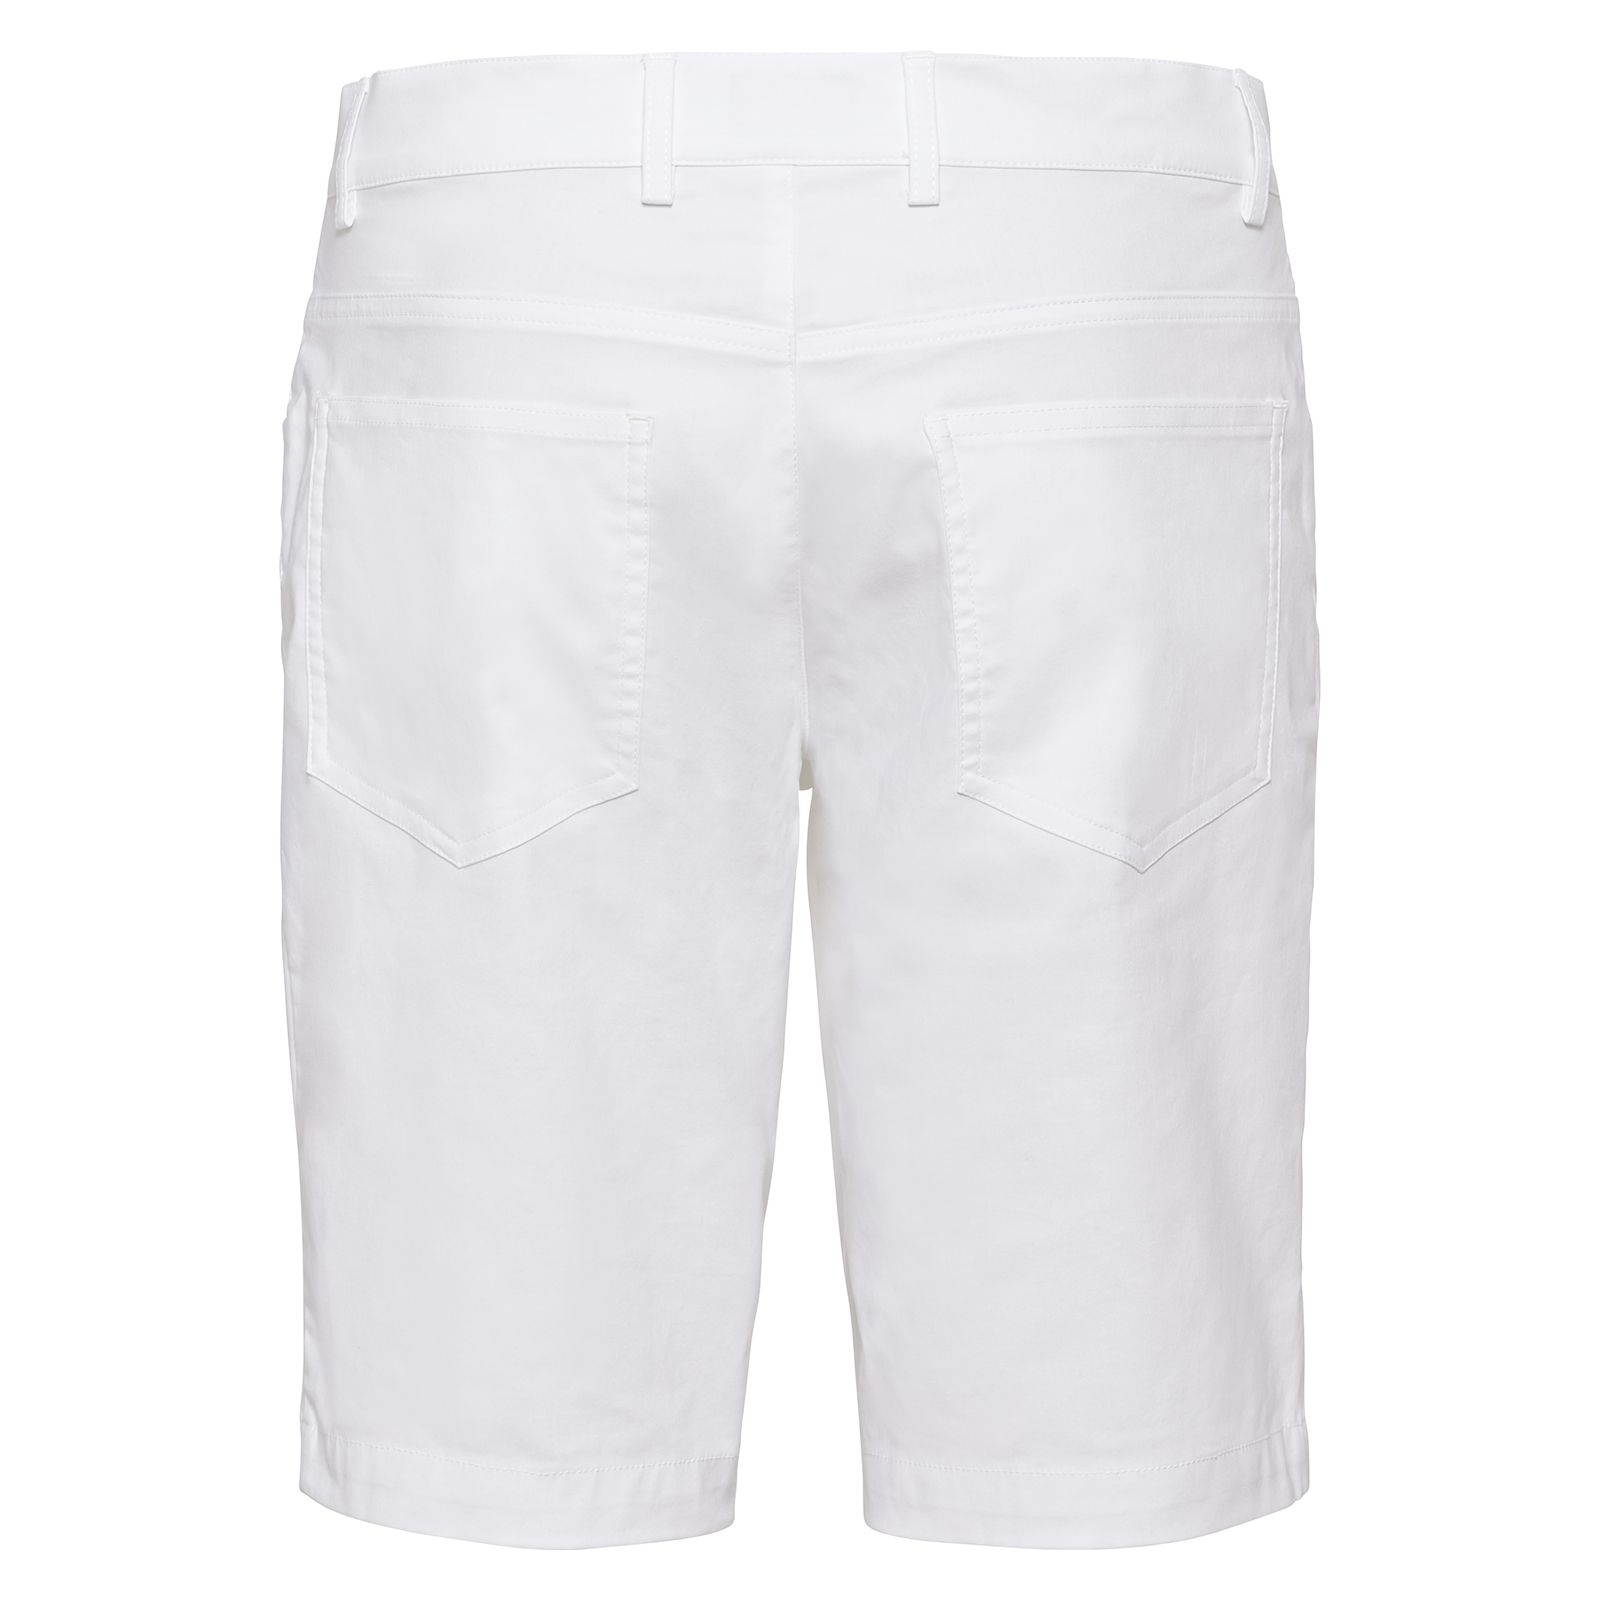 Practical 5-pocket style men's golf Bermuda shorts